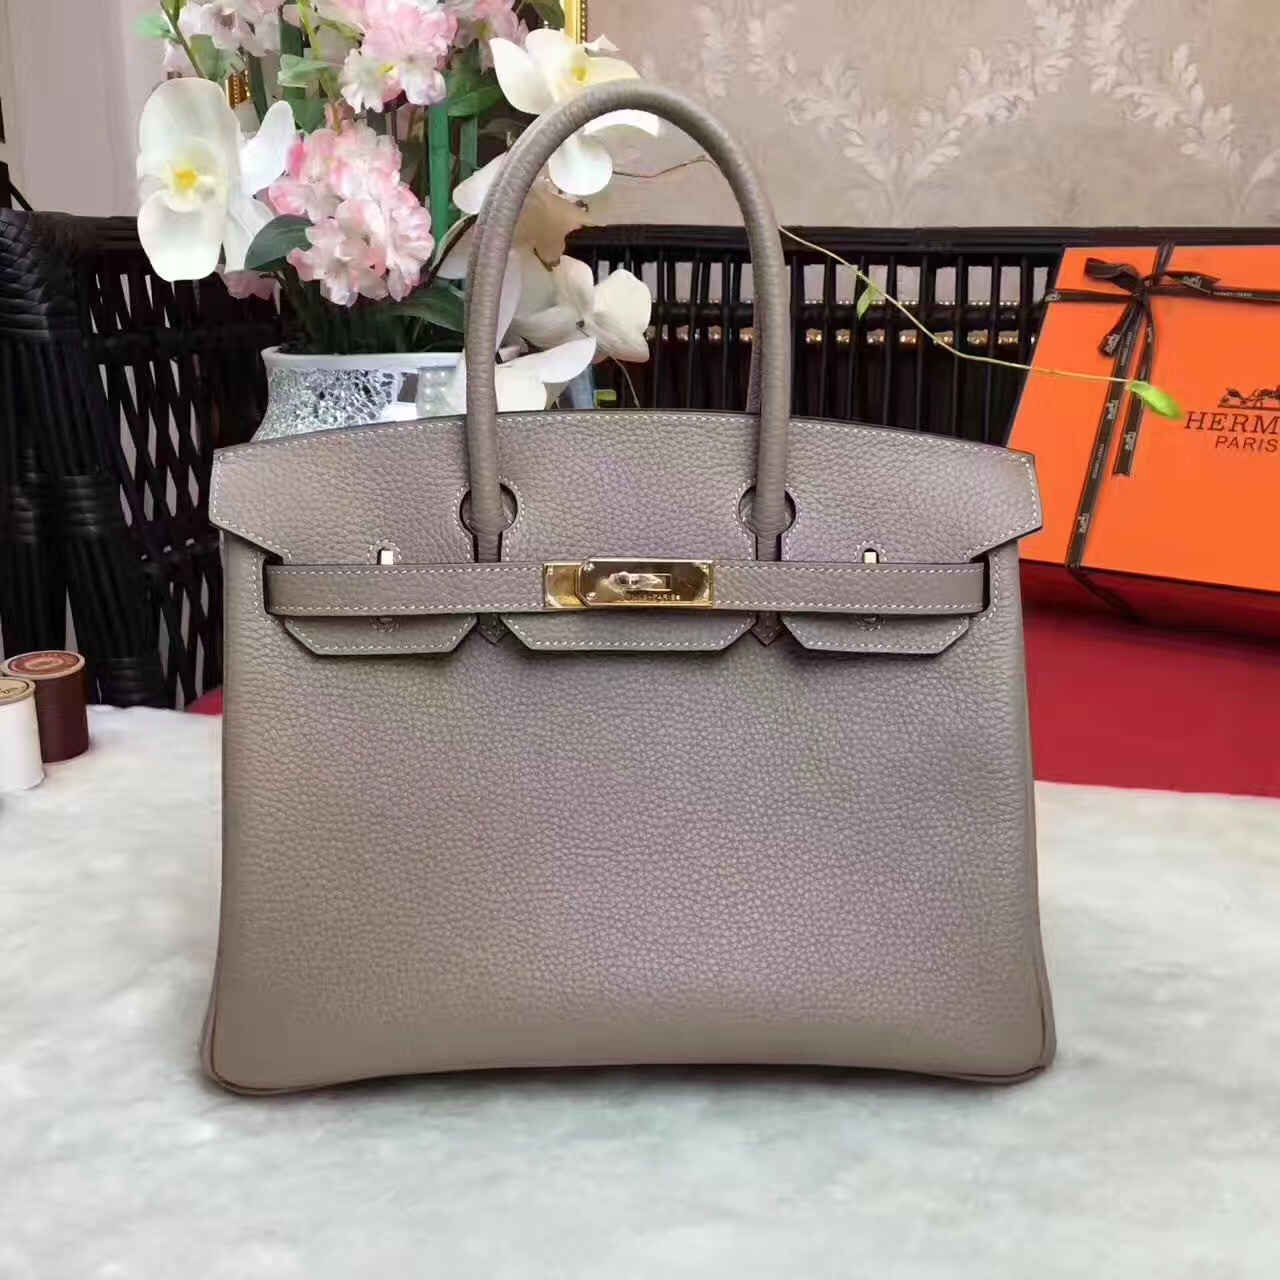 Hermes Birkin top leather gray handbags